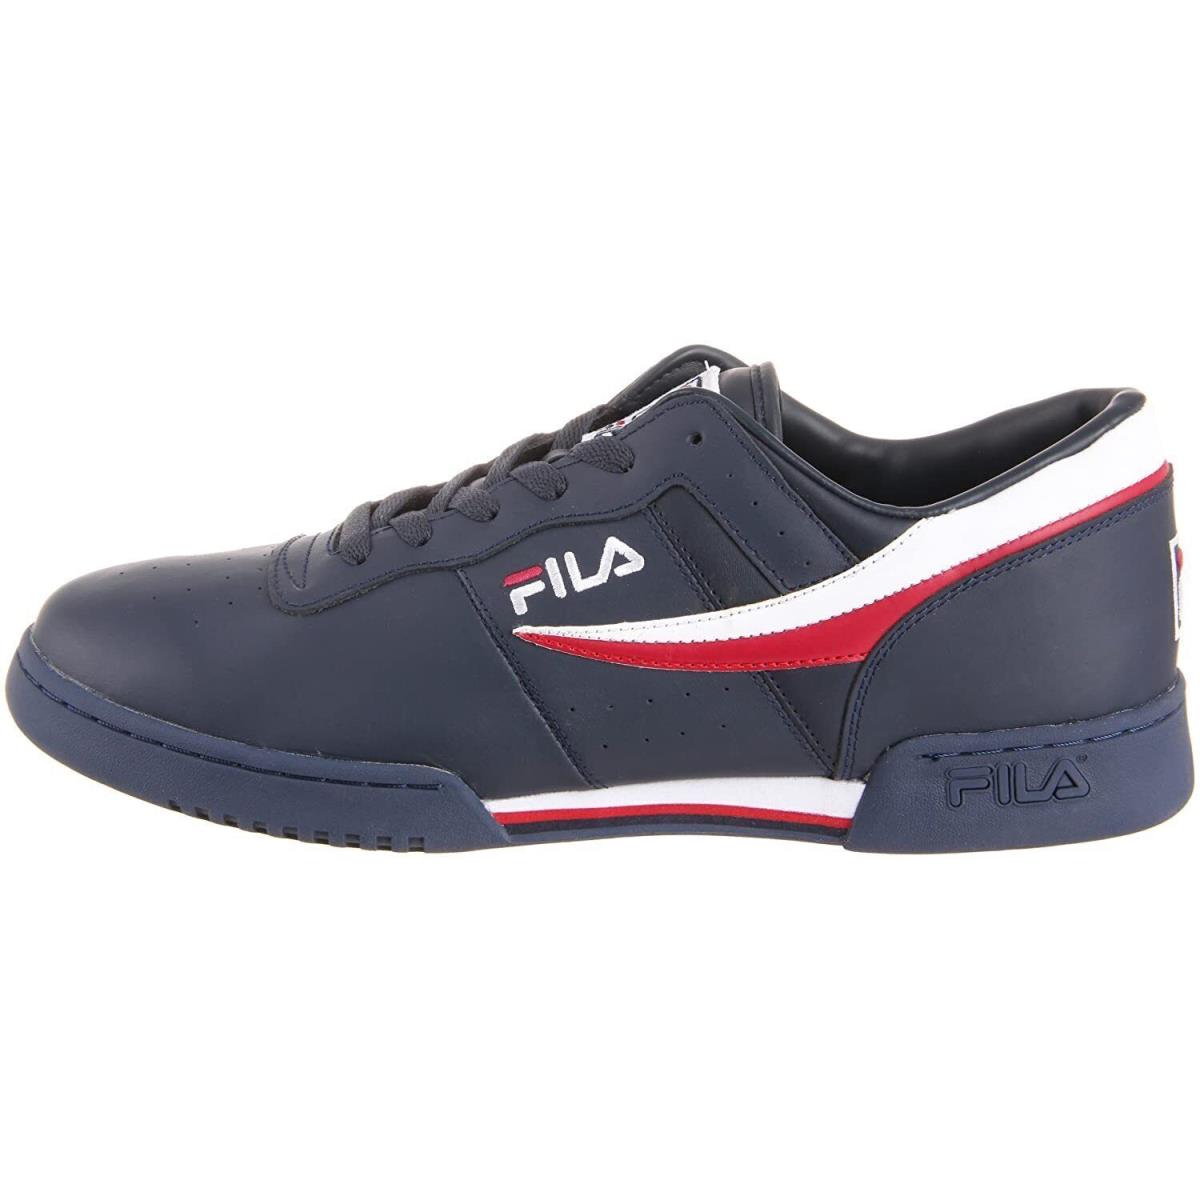 Fila shoes Original Fitness - Navy/White/Red 7